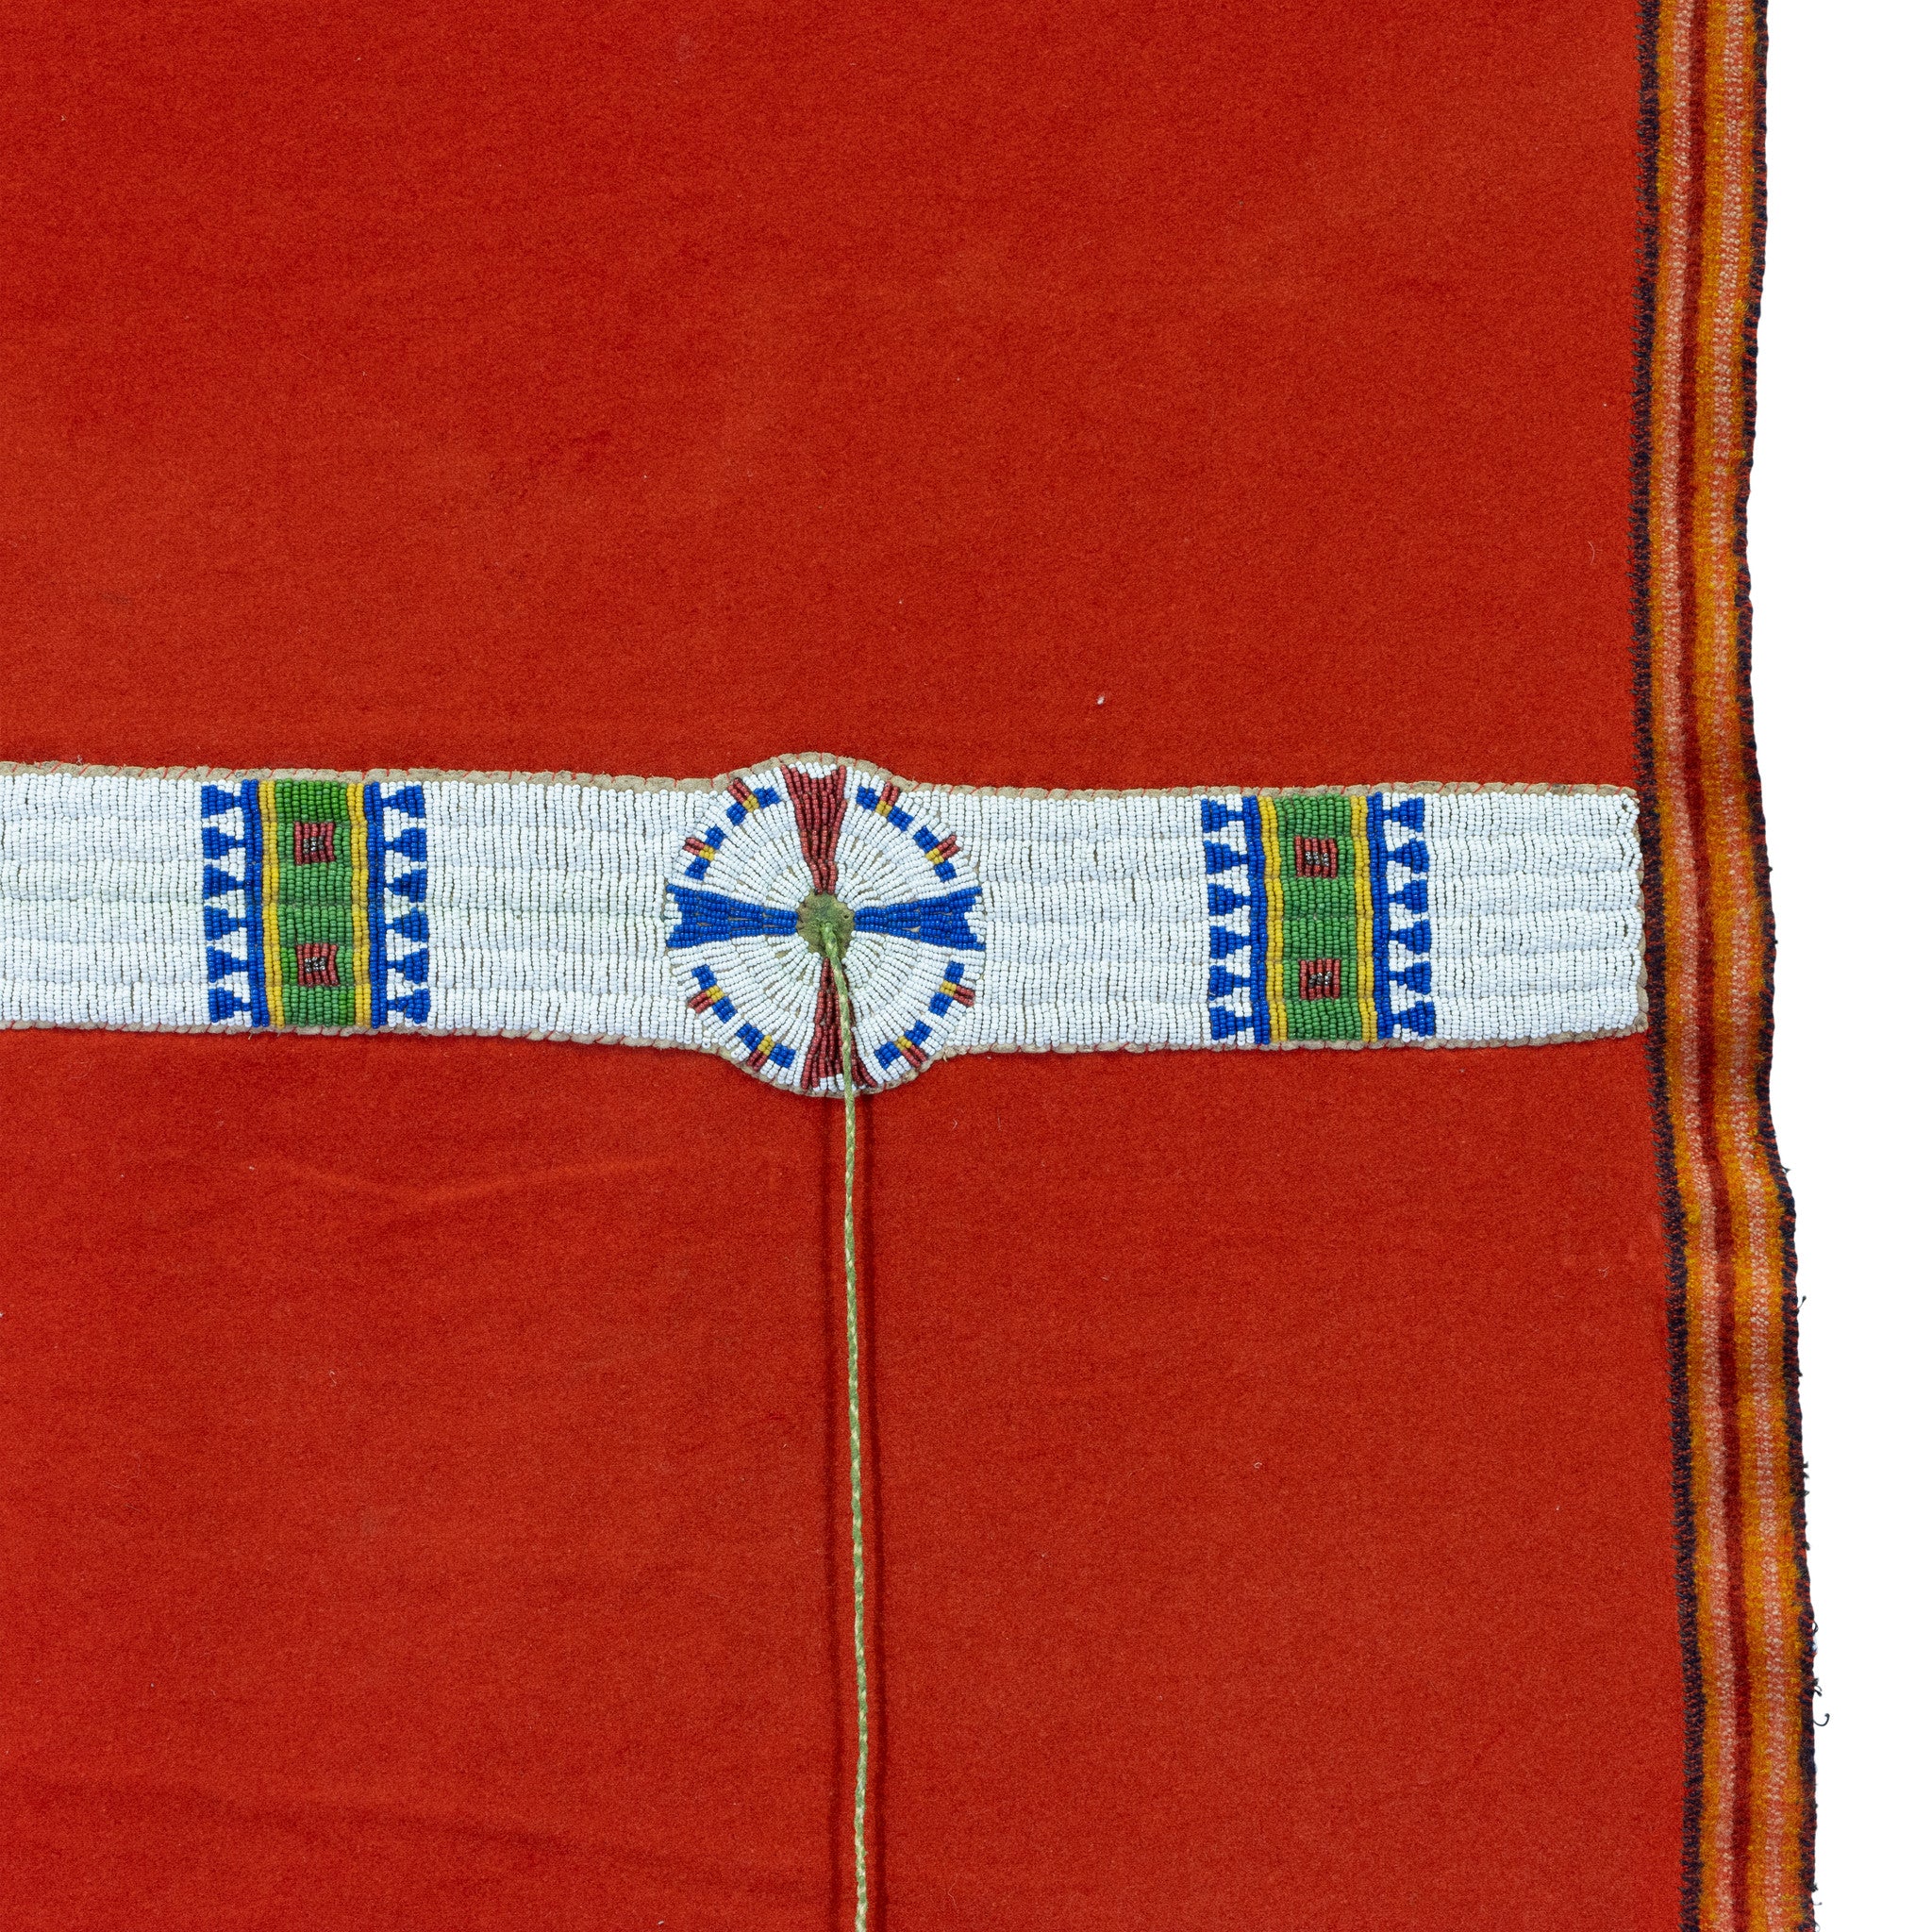 Sioux Beaded Blanket Strip